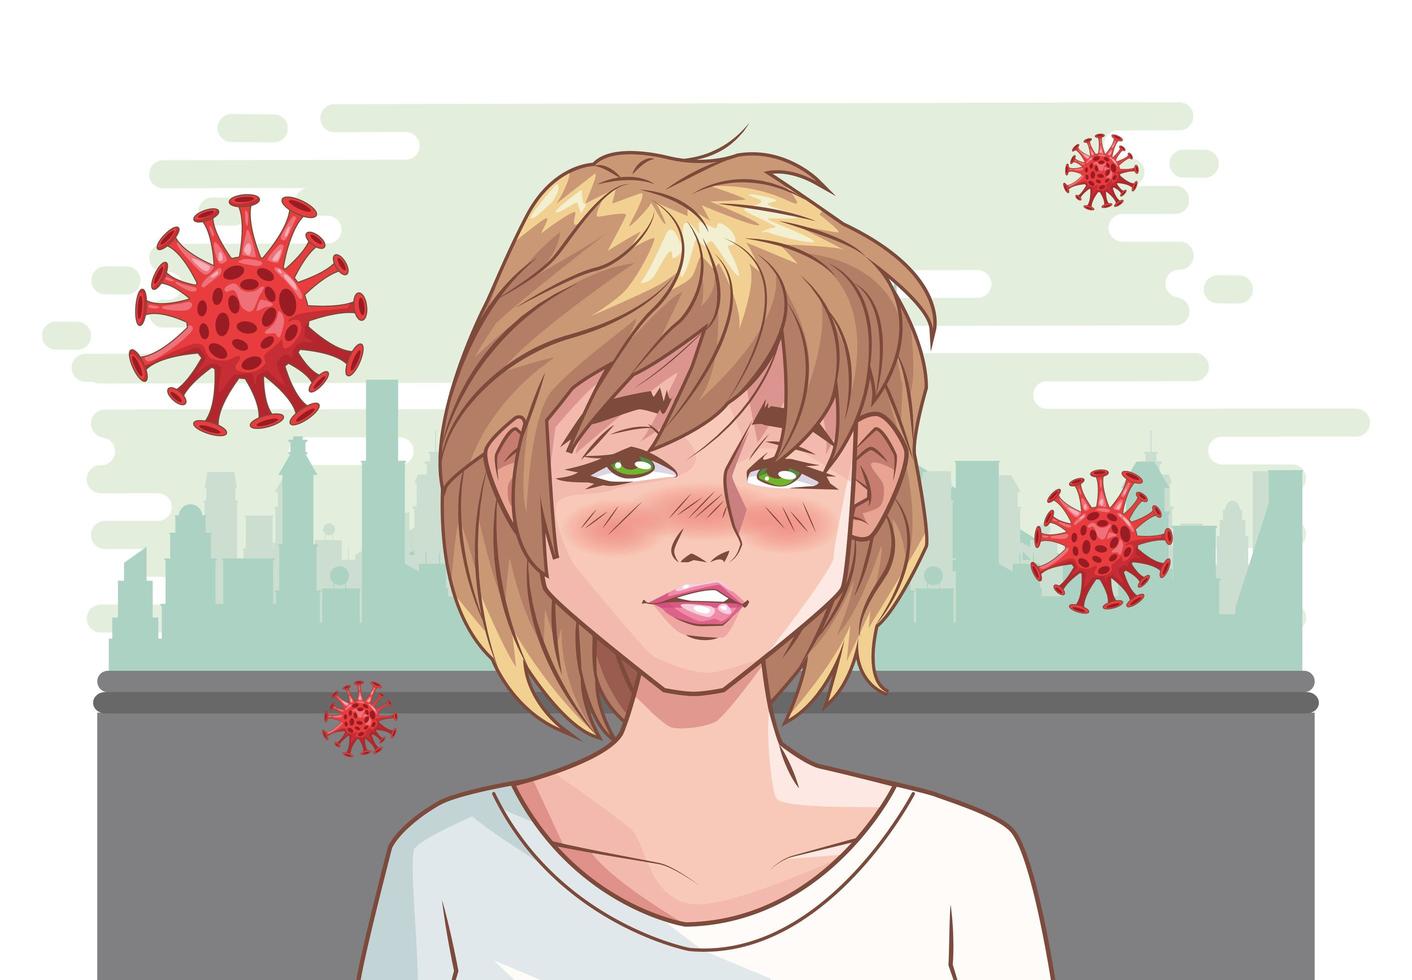 femme malade du coronavirus vecteur